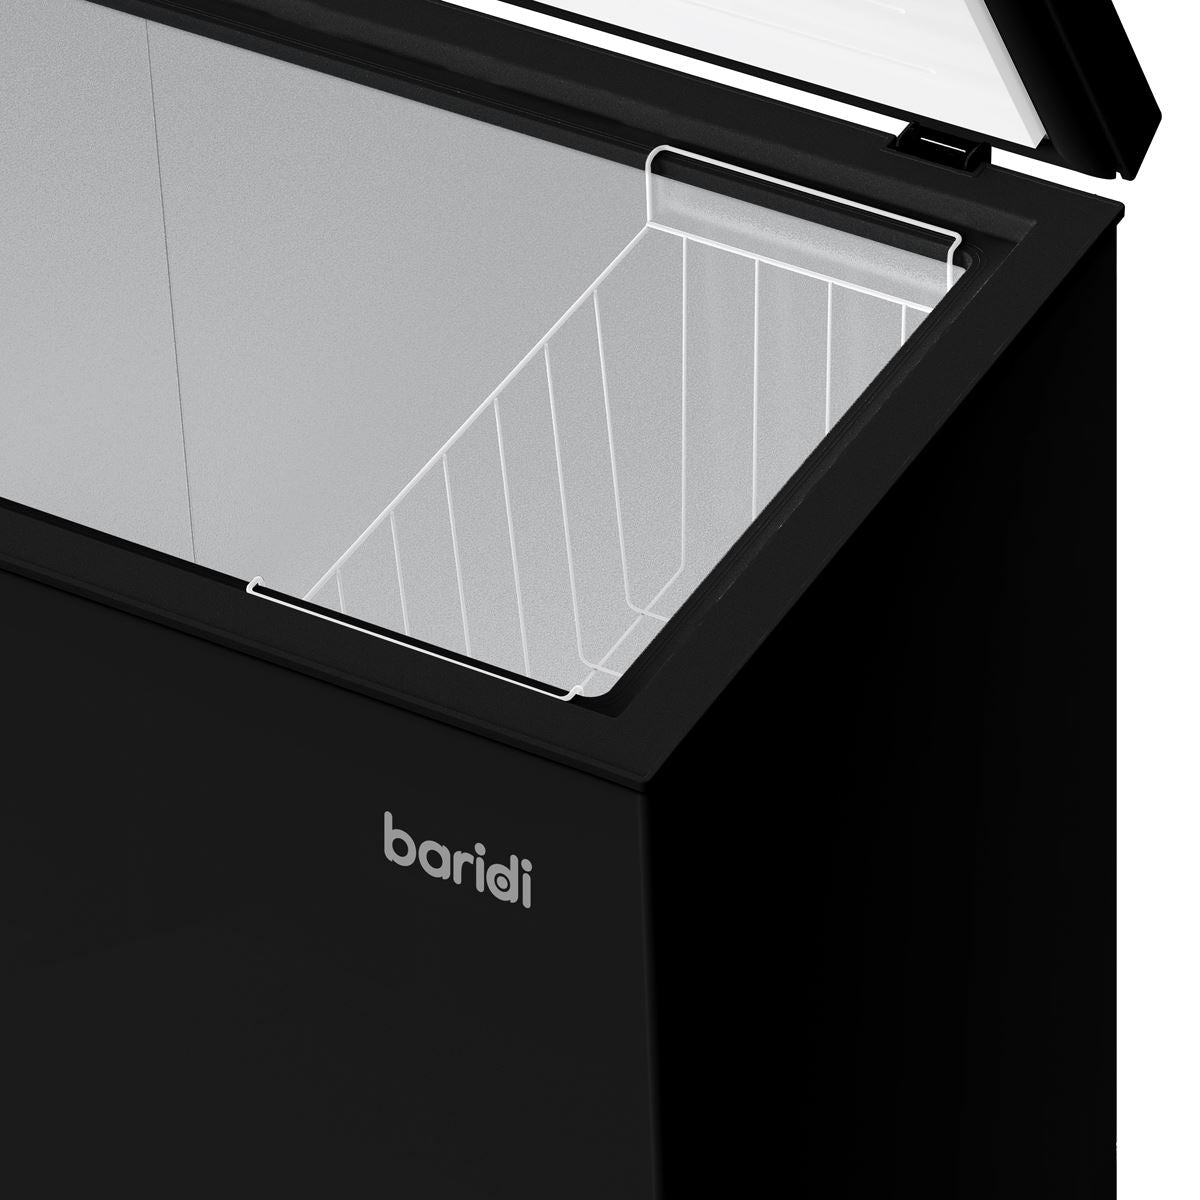 Baridi Freestanding Chest Freezer, 99L Capacity, -12 to -24°C Adjustable Thermostat, Black - DH153